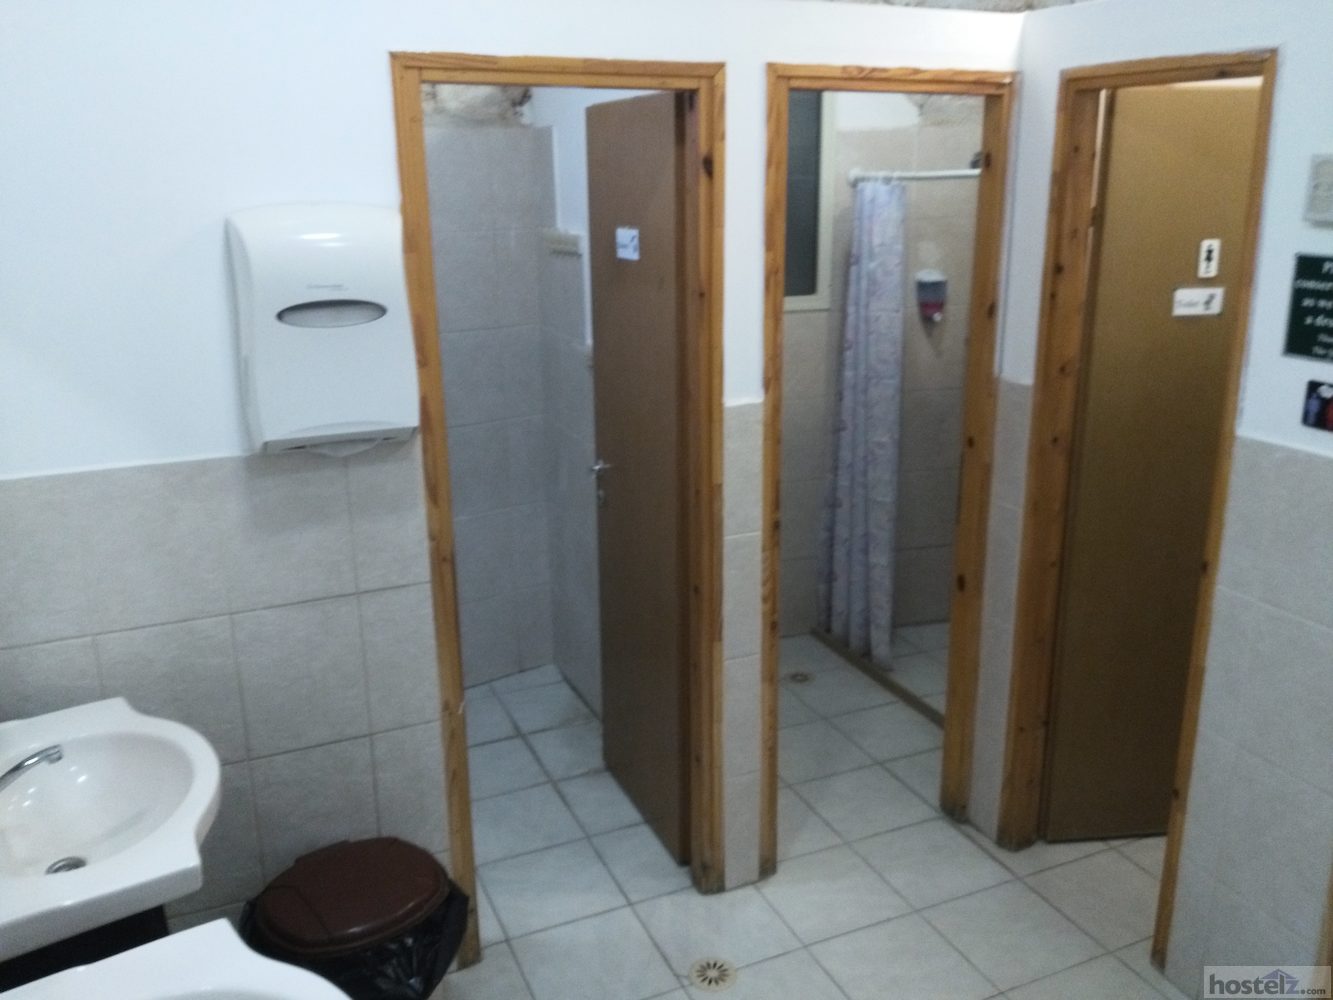 communal bathrooms